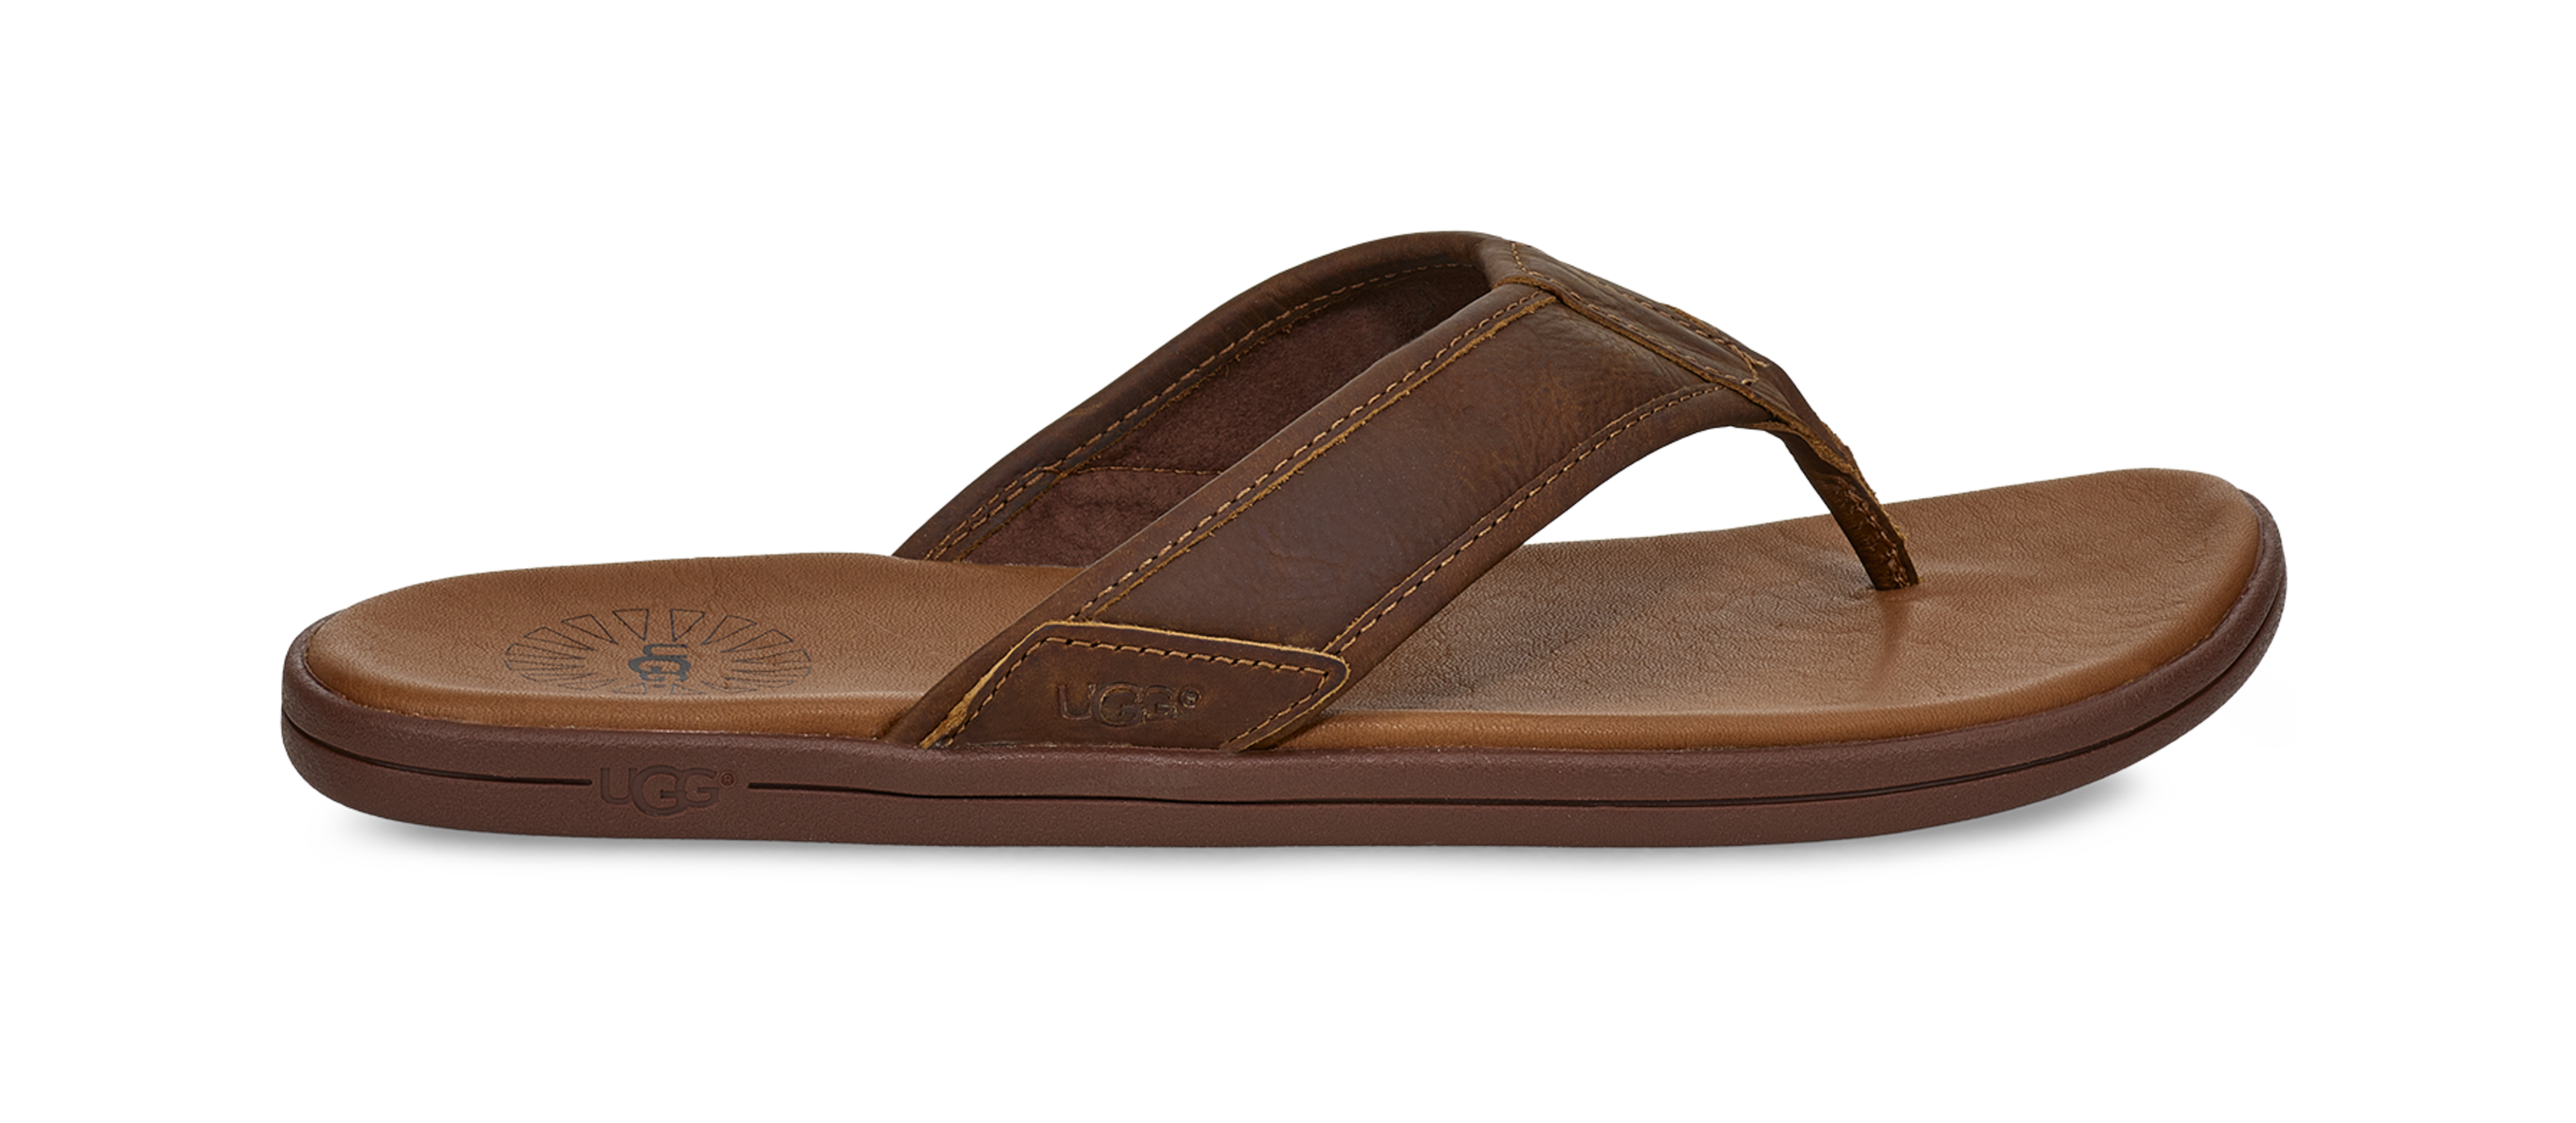 Seaside Flip Leather Sandal